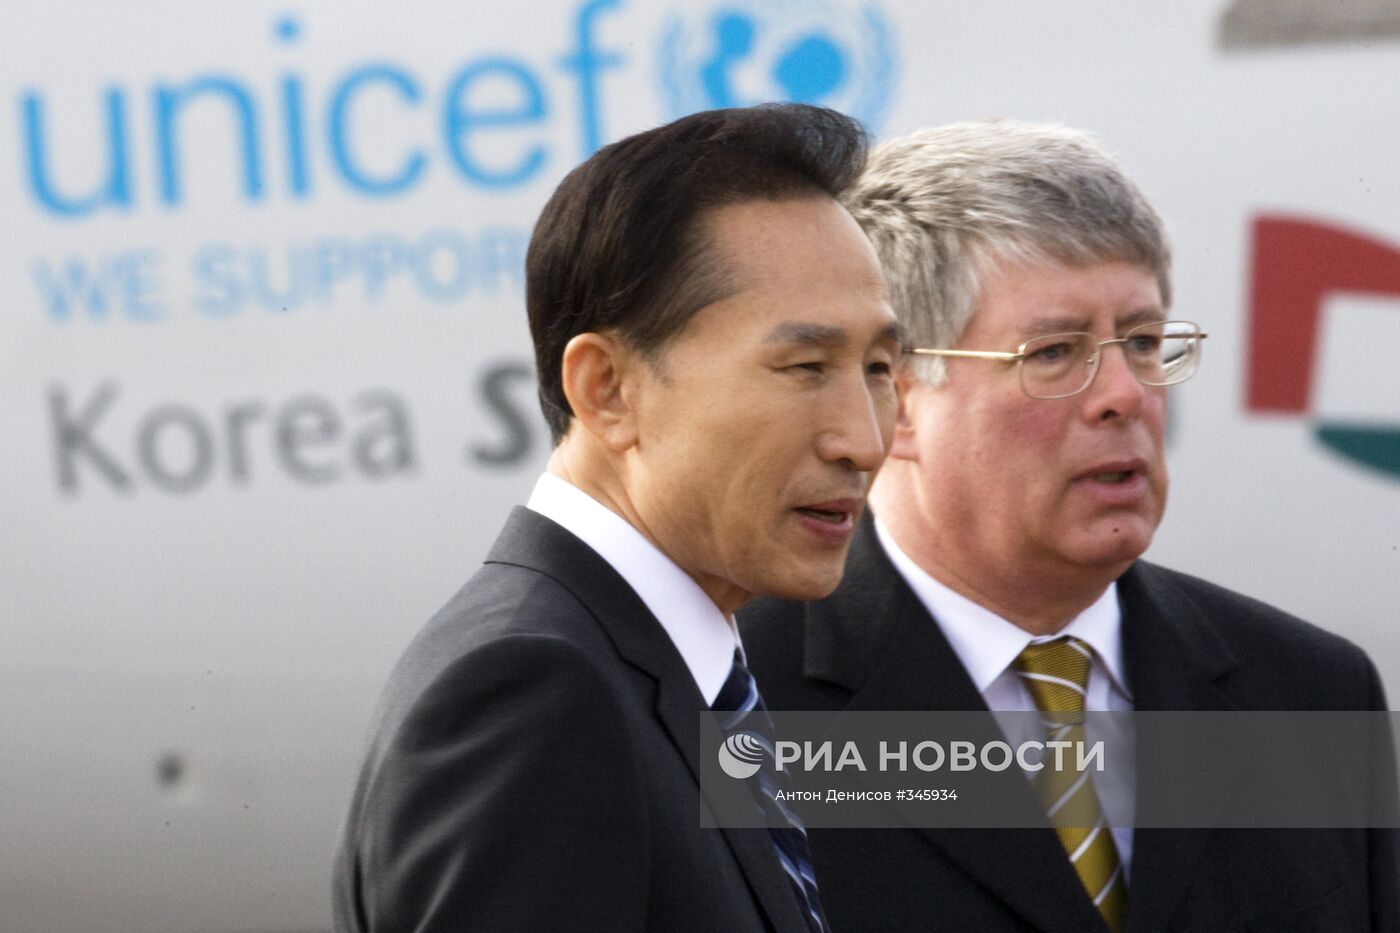 Президент Южной Кореи Ли Мен Бак прибыл в Москву